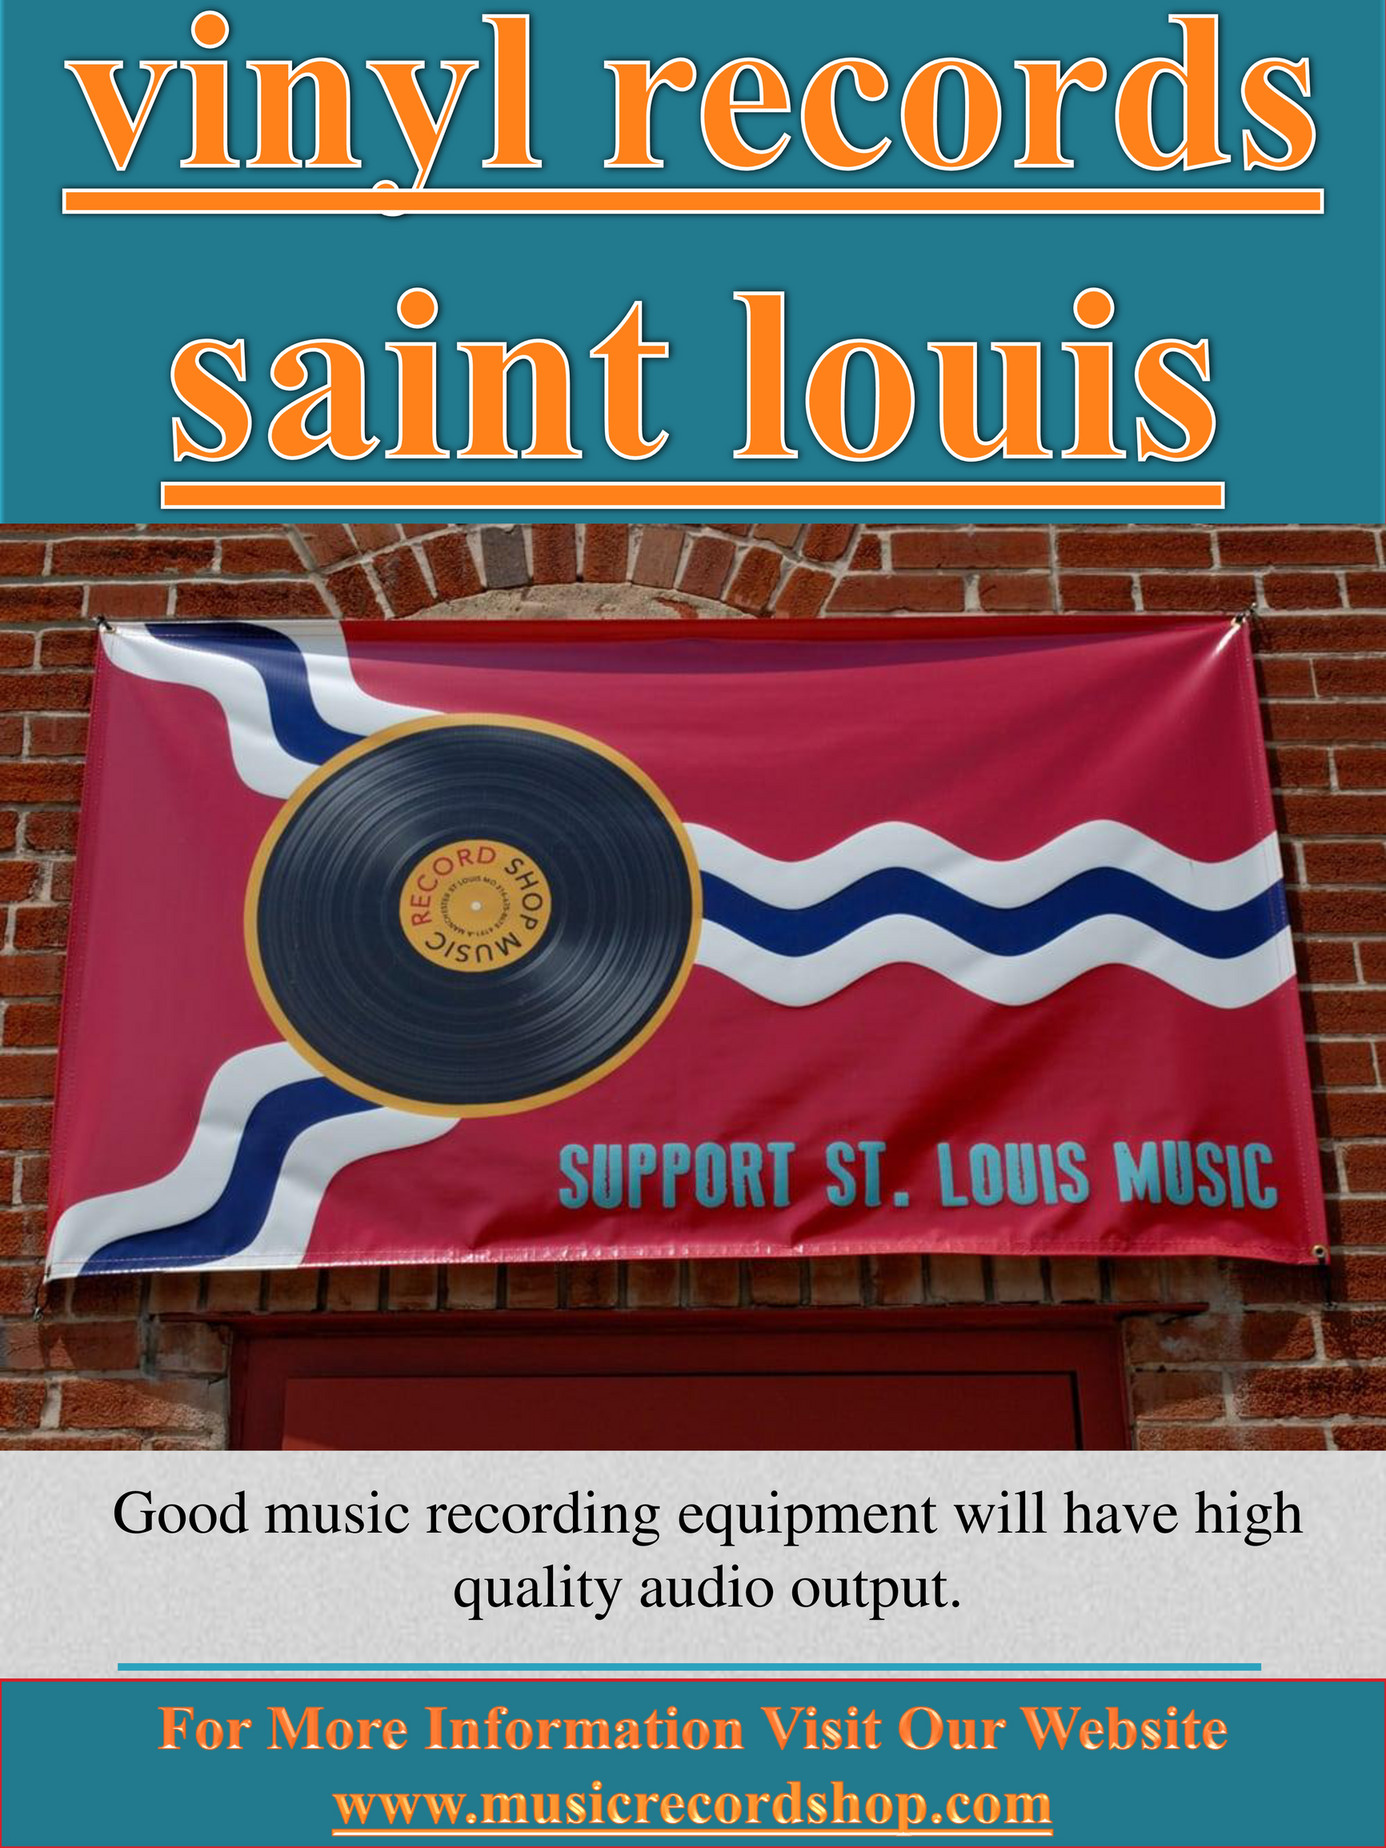 Music Record Store Near Me - Vinyl Records Saint Louis ...